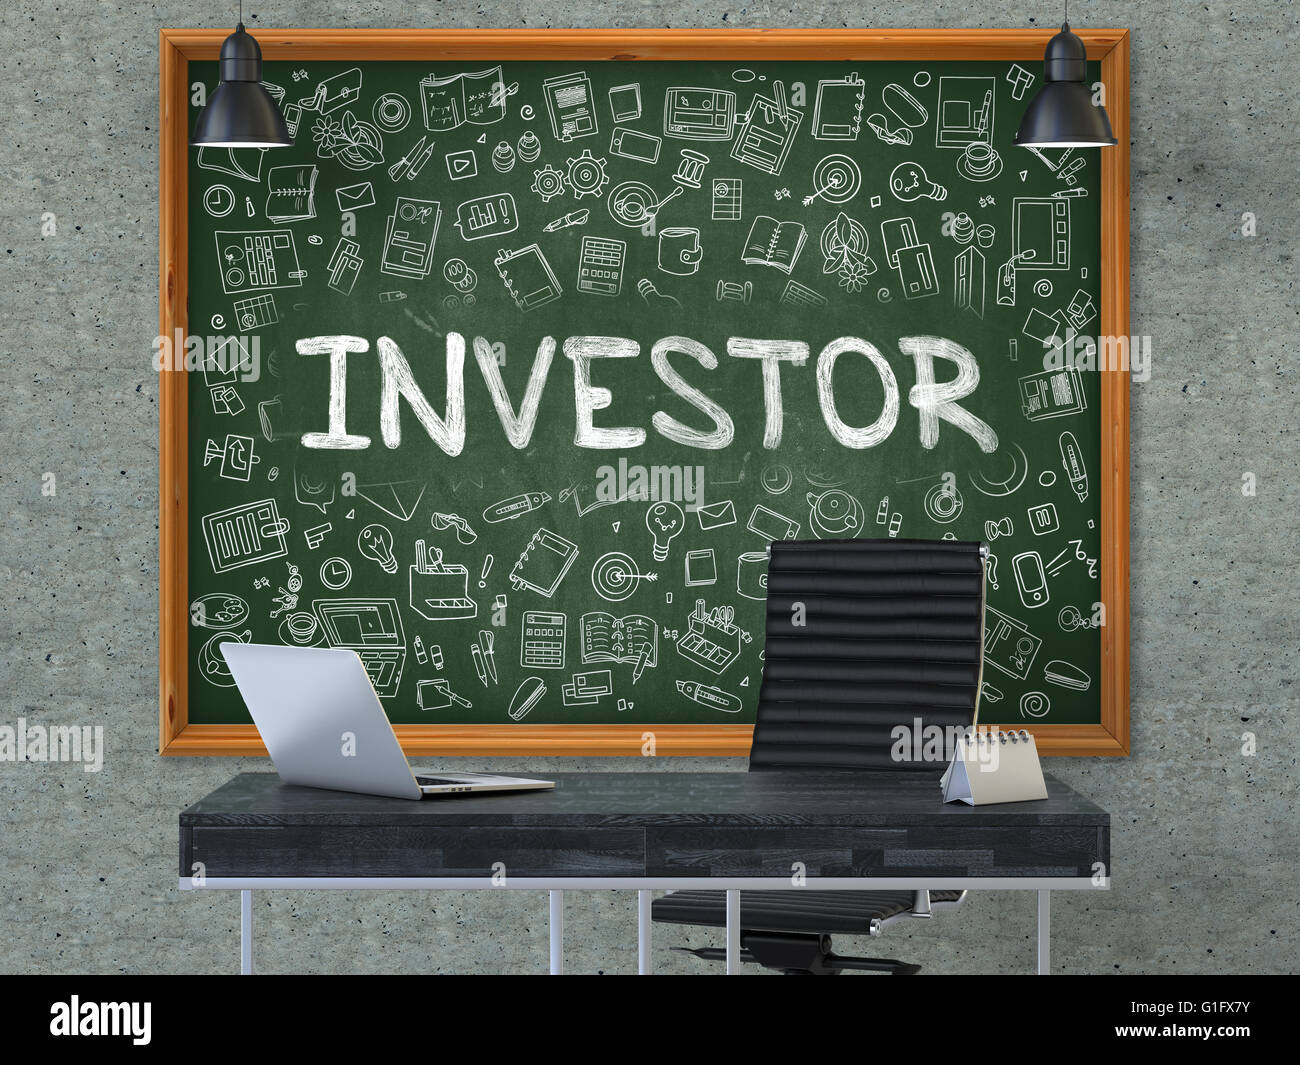 Investor-Konzept. Doodle-Symbole auf der Tafel. Stockfoto